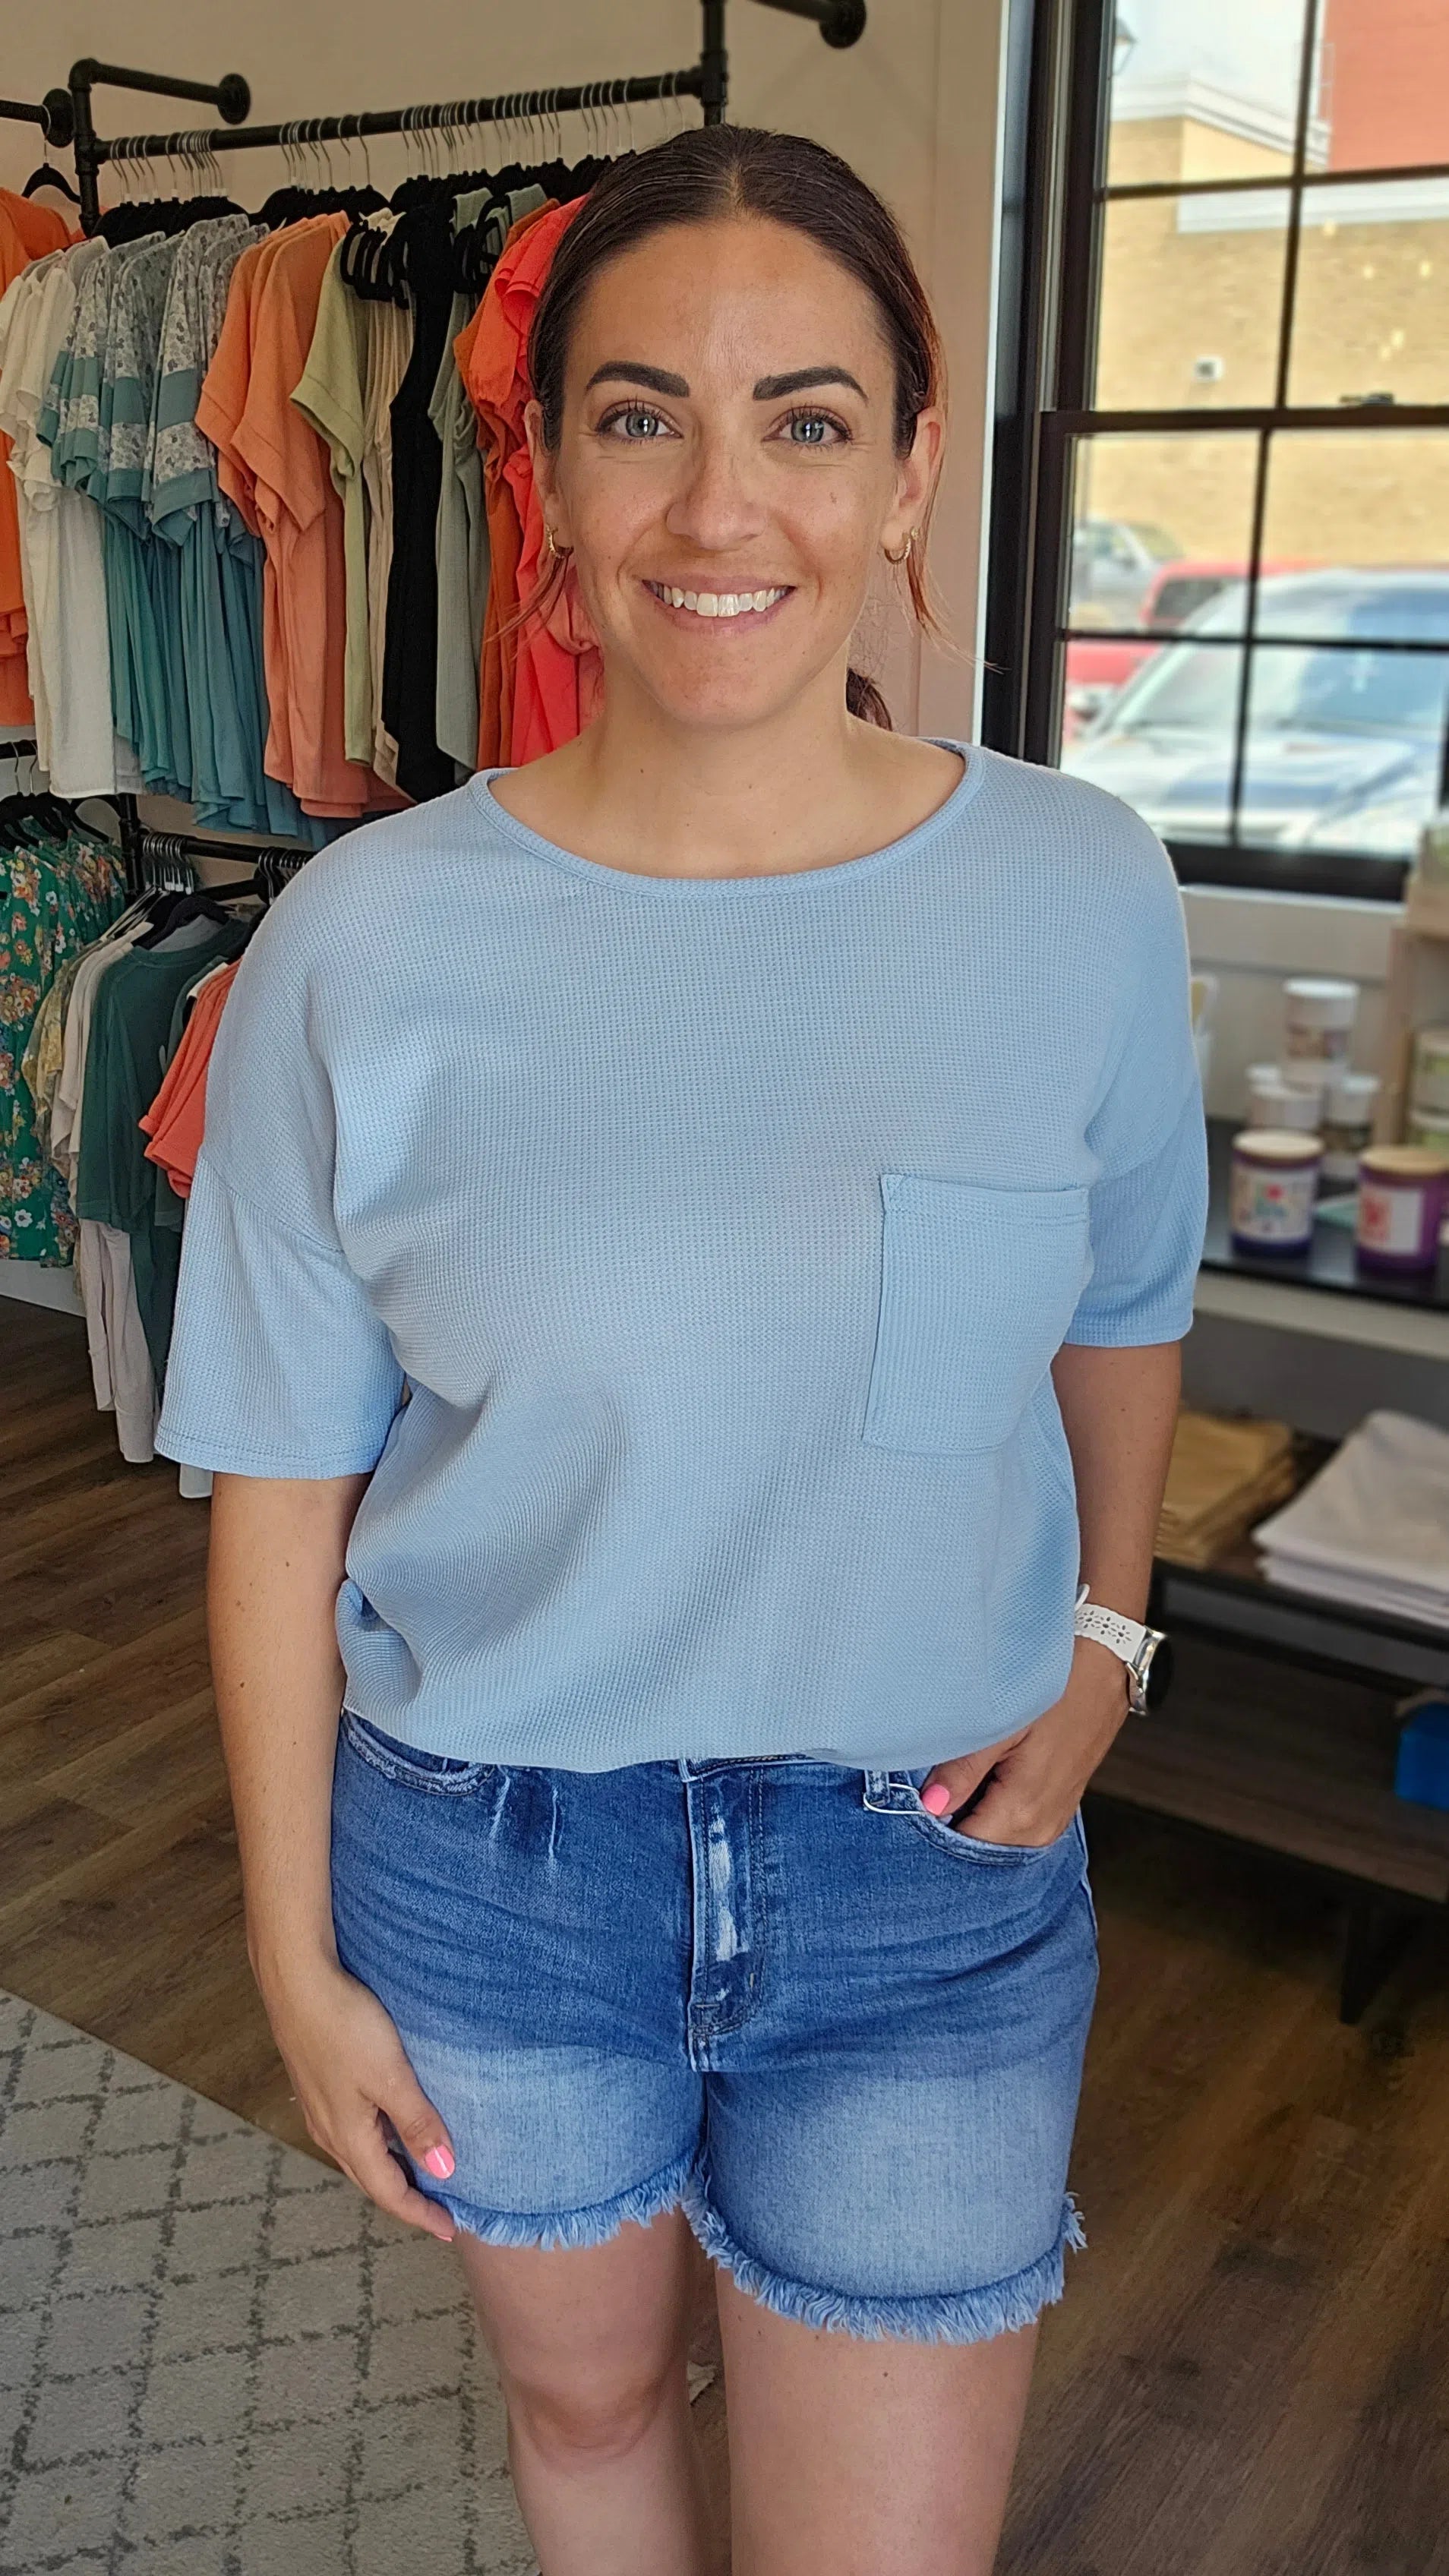 Shop Nyla Raw Fray Hem Shorts | Zenana-Shorts at Ruby Joy Boutique, a Women's Clothing Store in Pickerington, Ohio